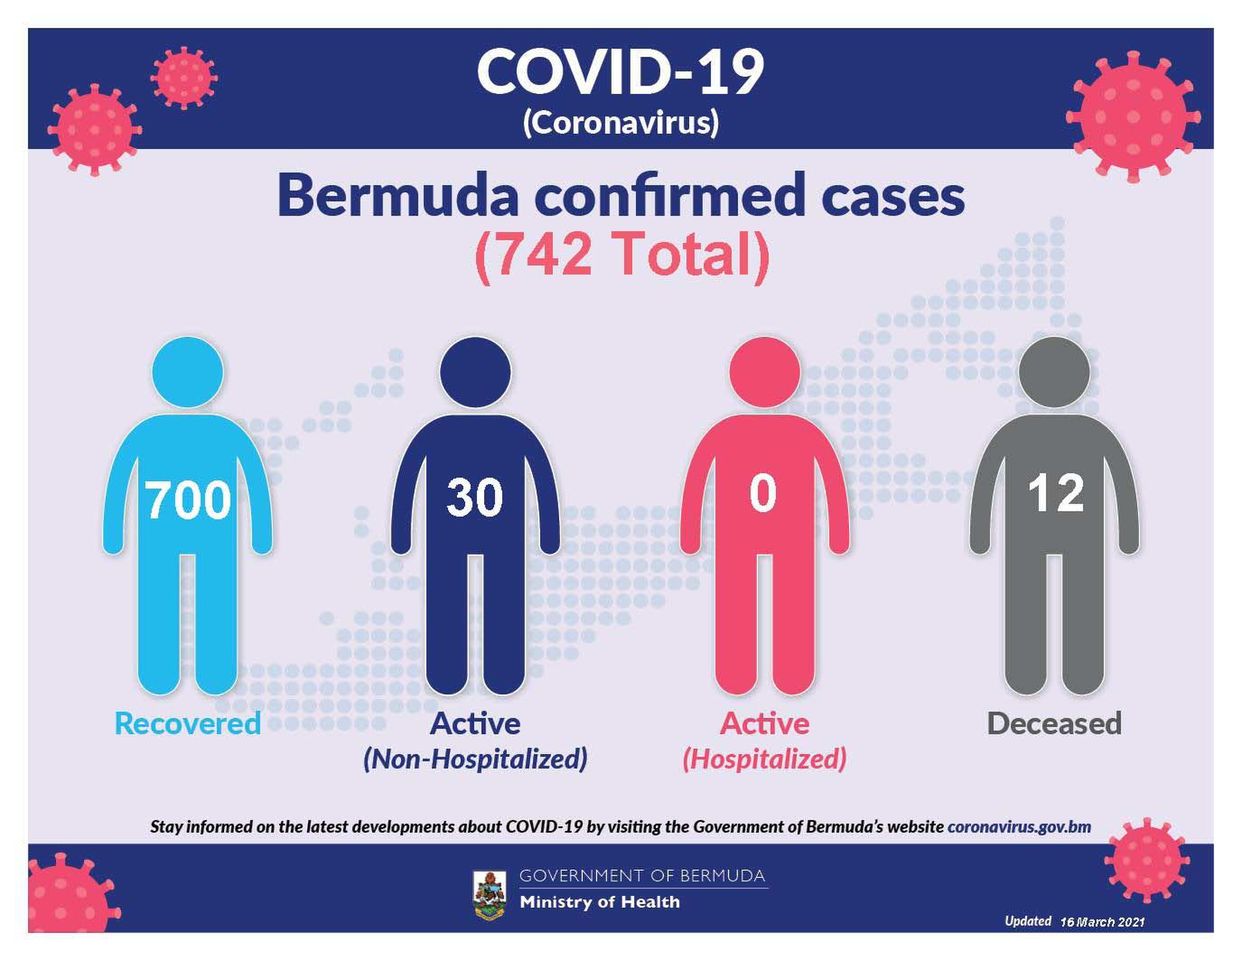 2 new COVID-19 cases reported in Bermuda, 16 March 2021